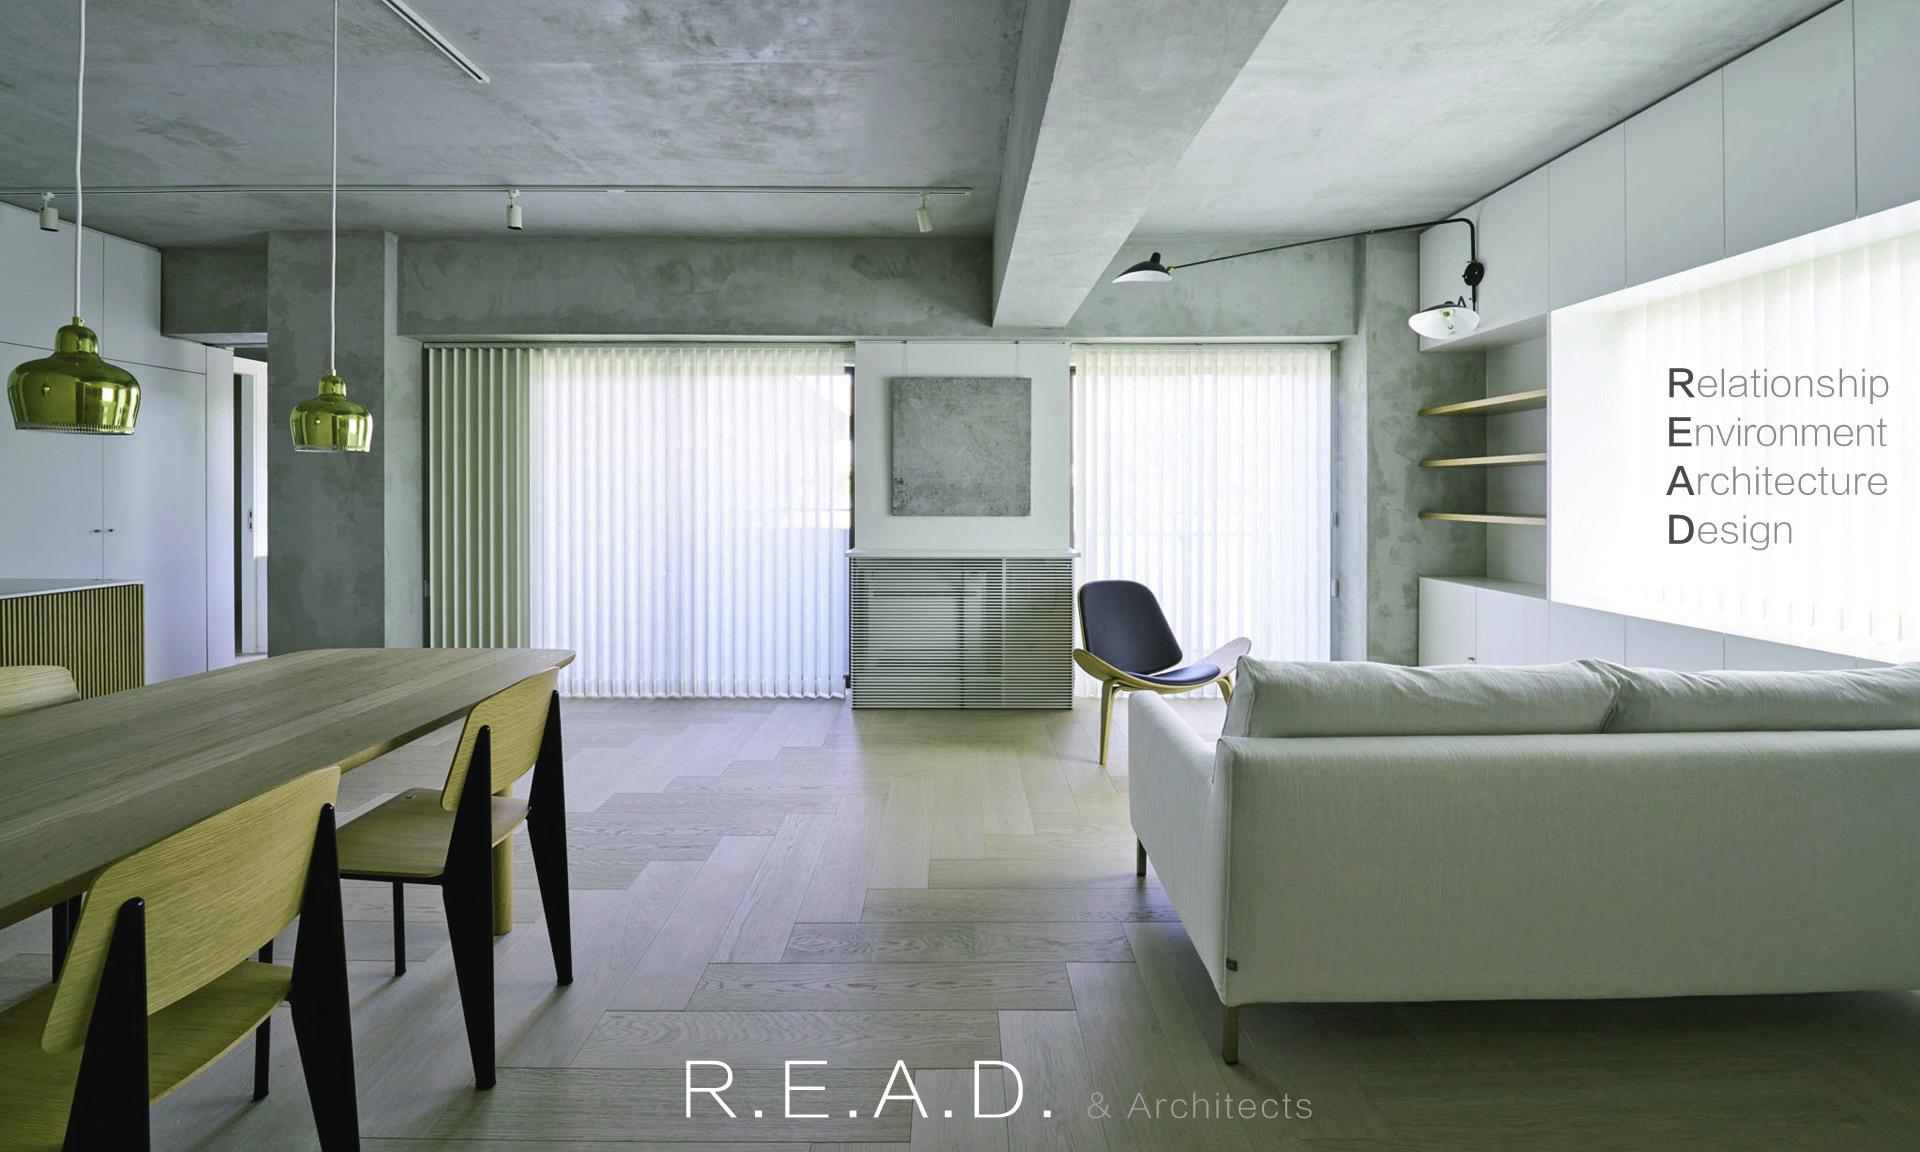 R.E.A.D.& Architects